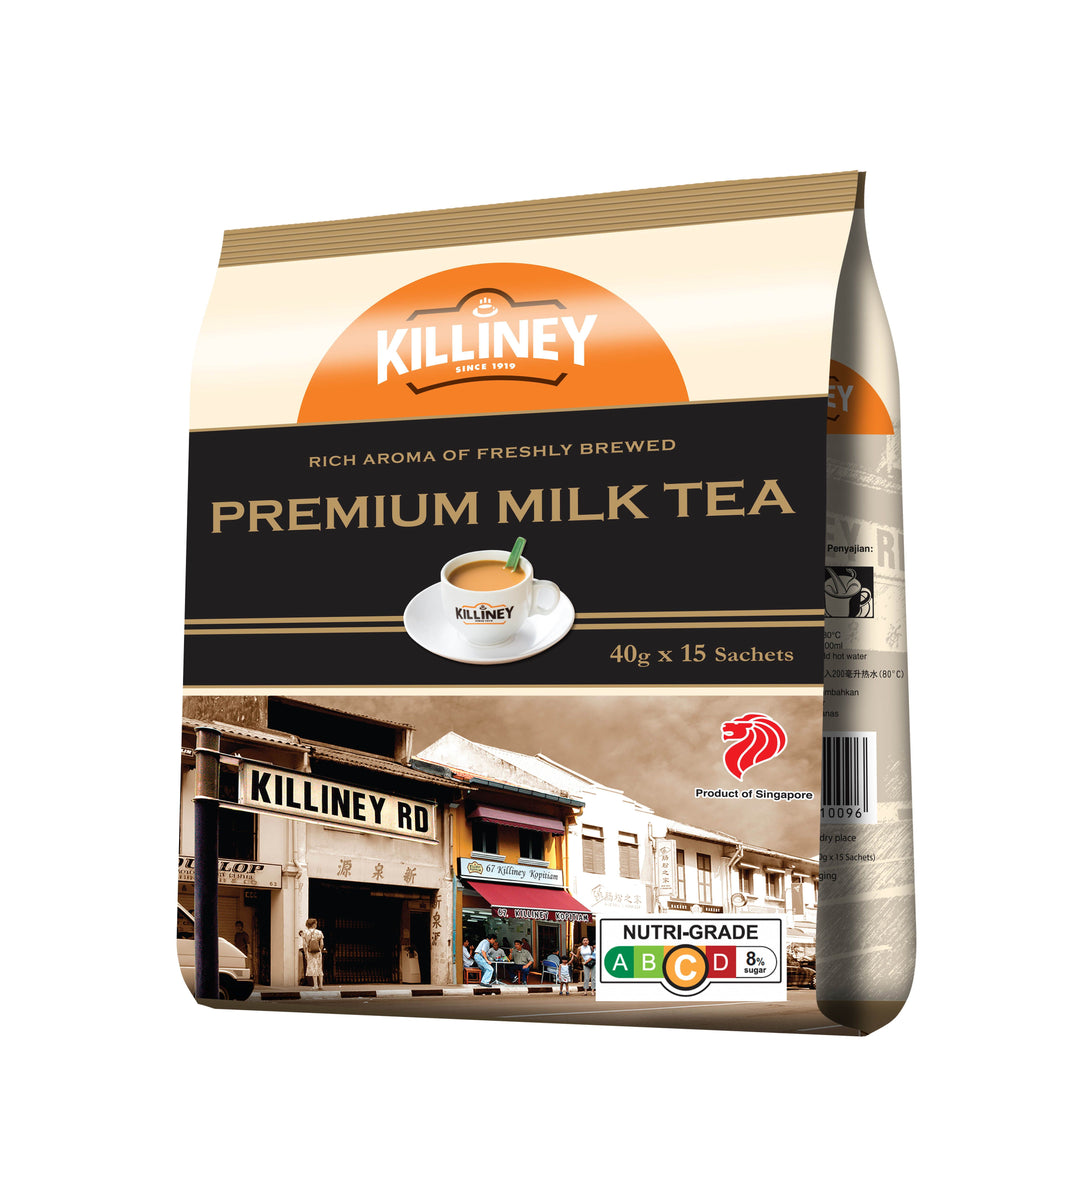 [Festive Edition] Killiney Tea Lover Gift Box - Killiney Singapore